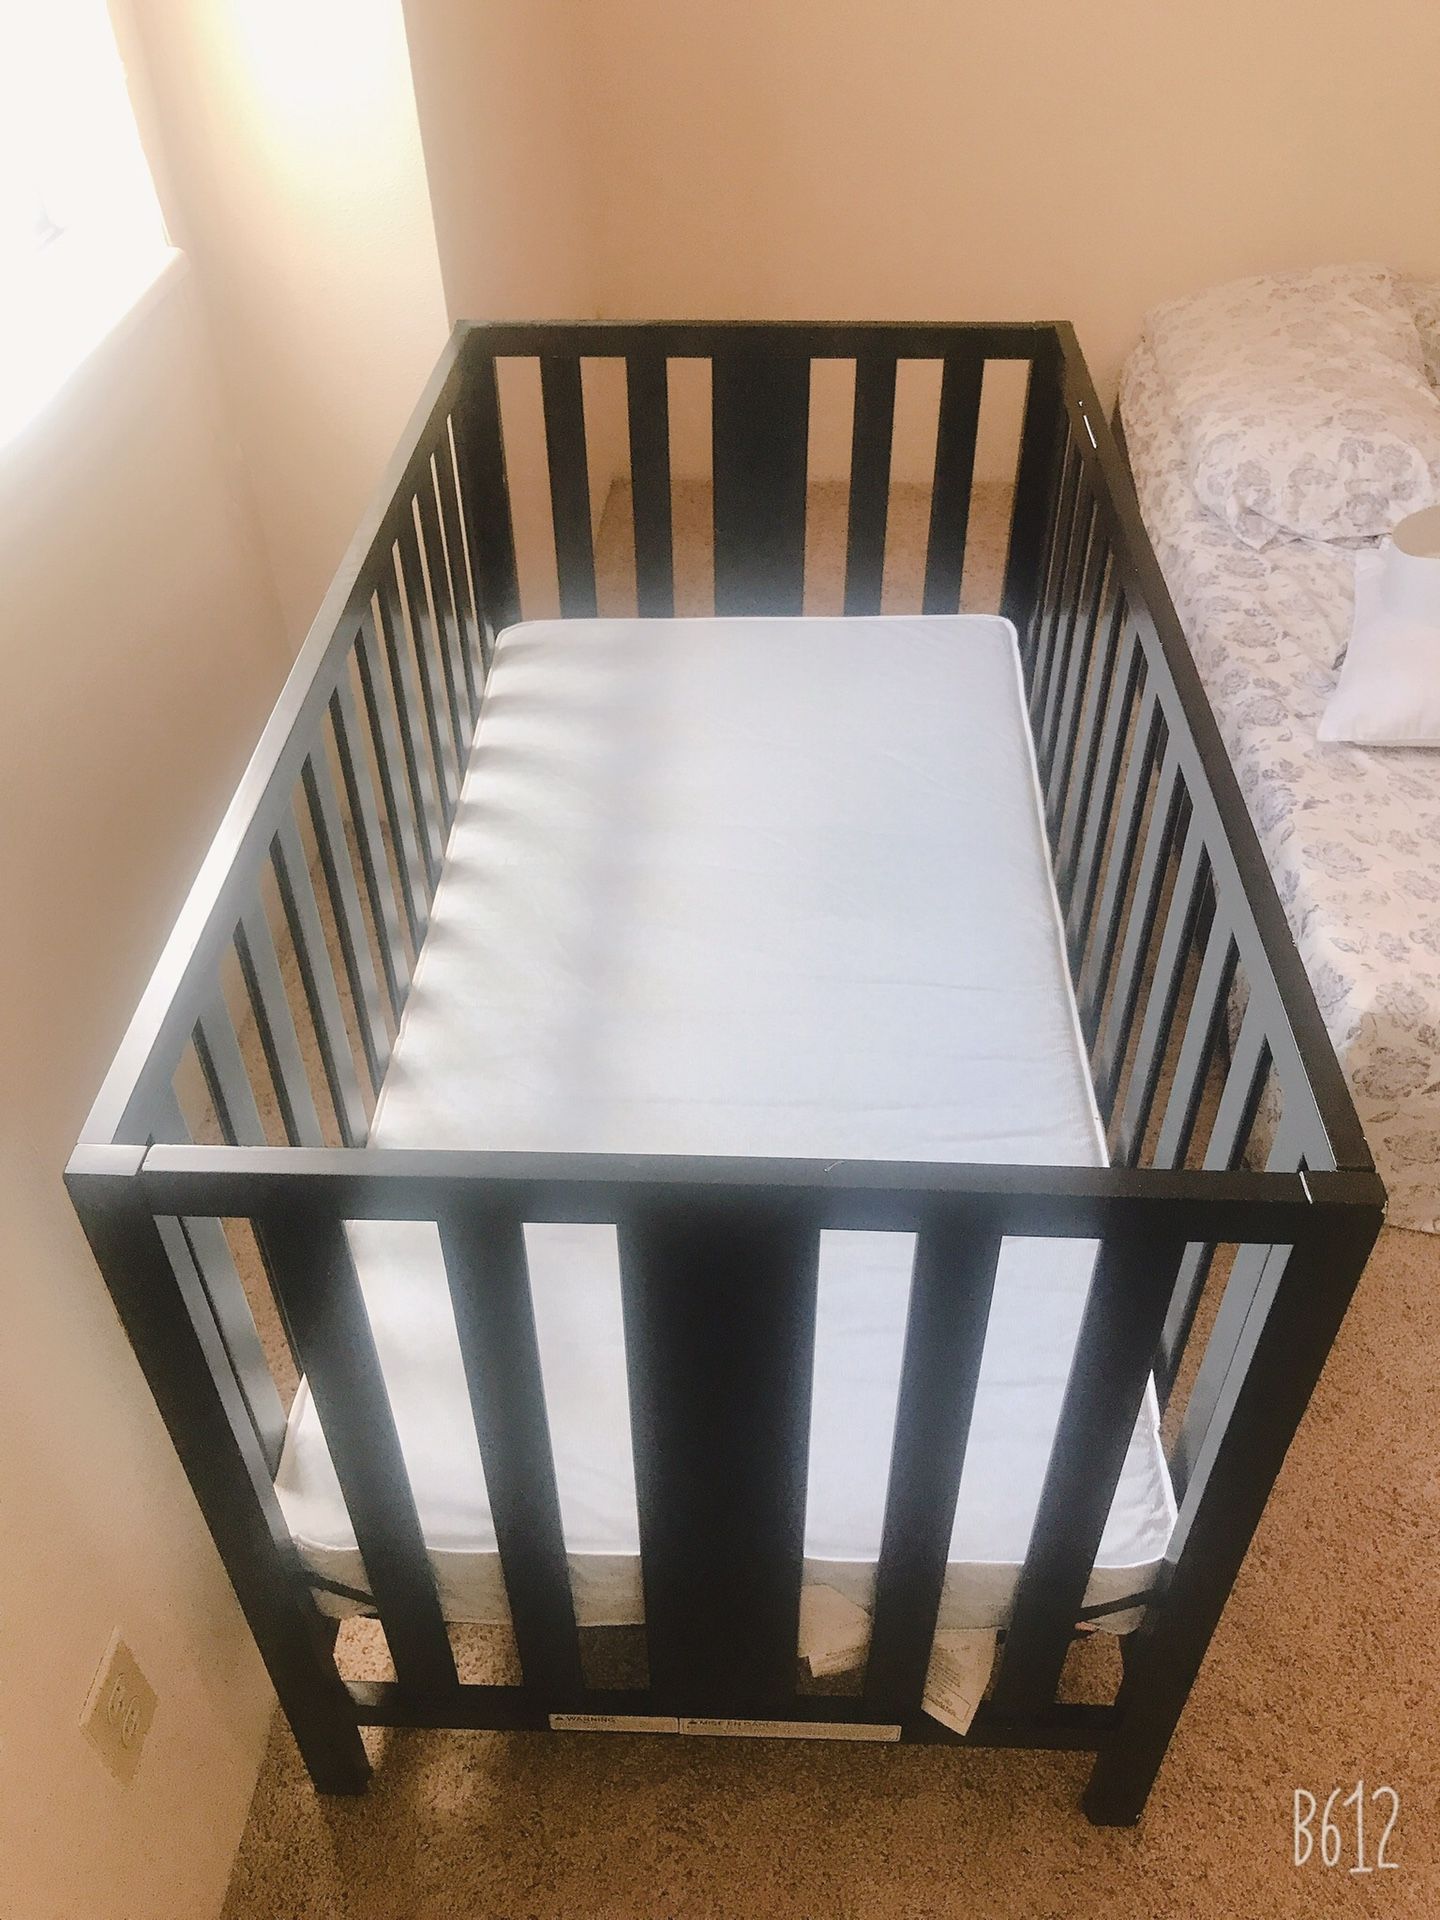 Baby crib never used